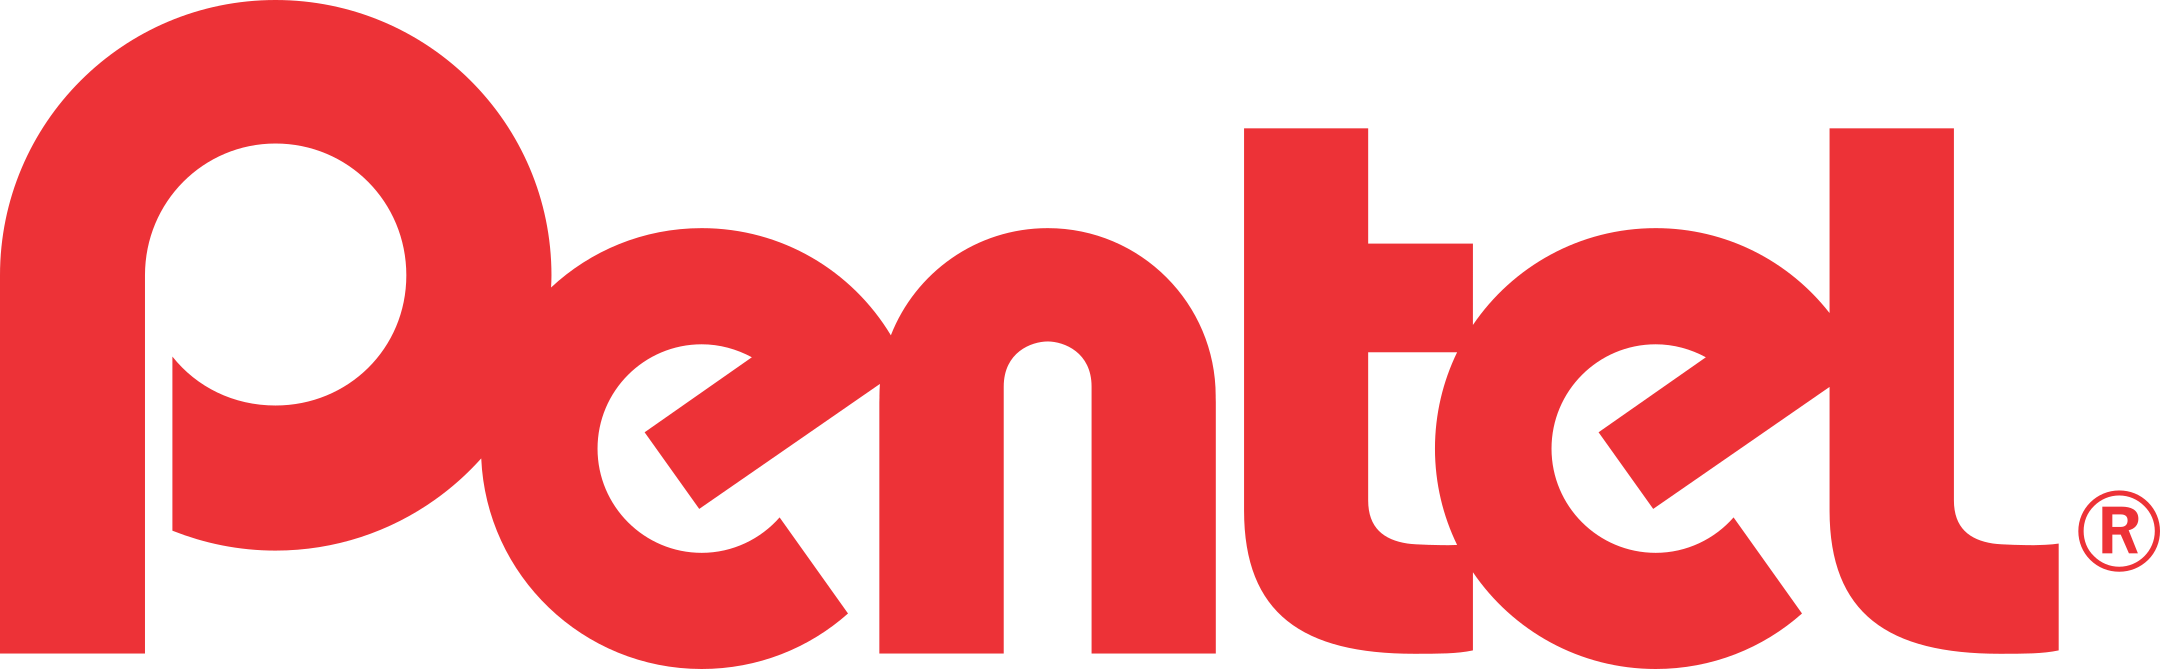 Pentel Logo.